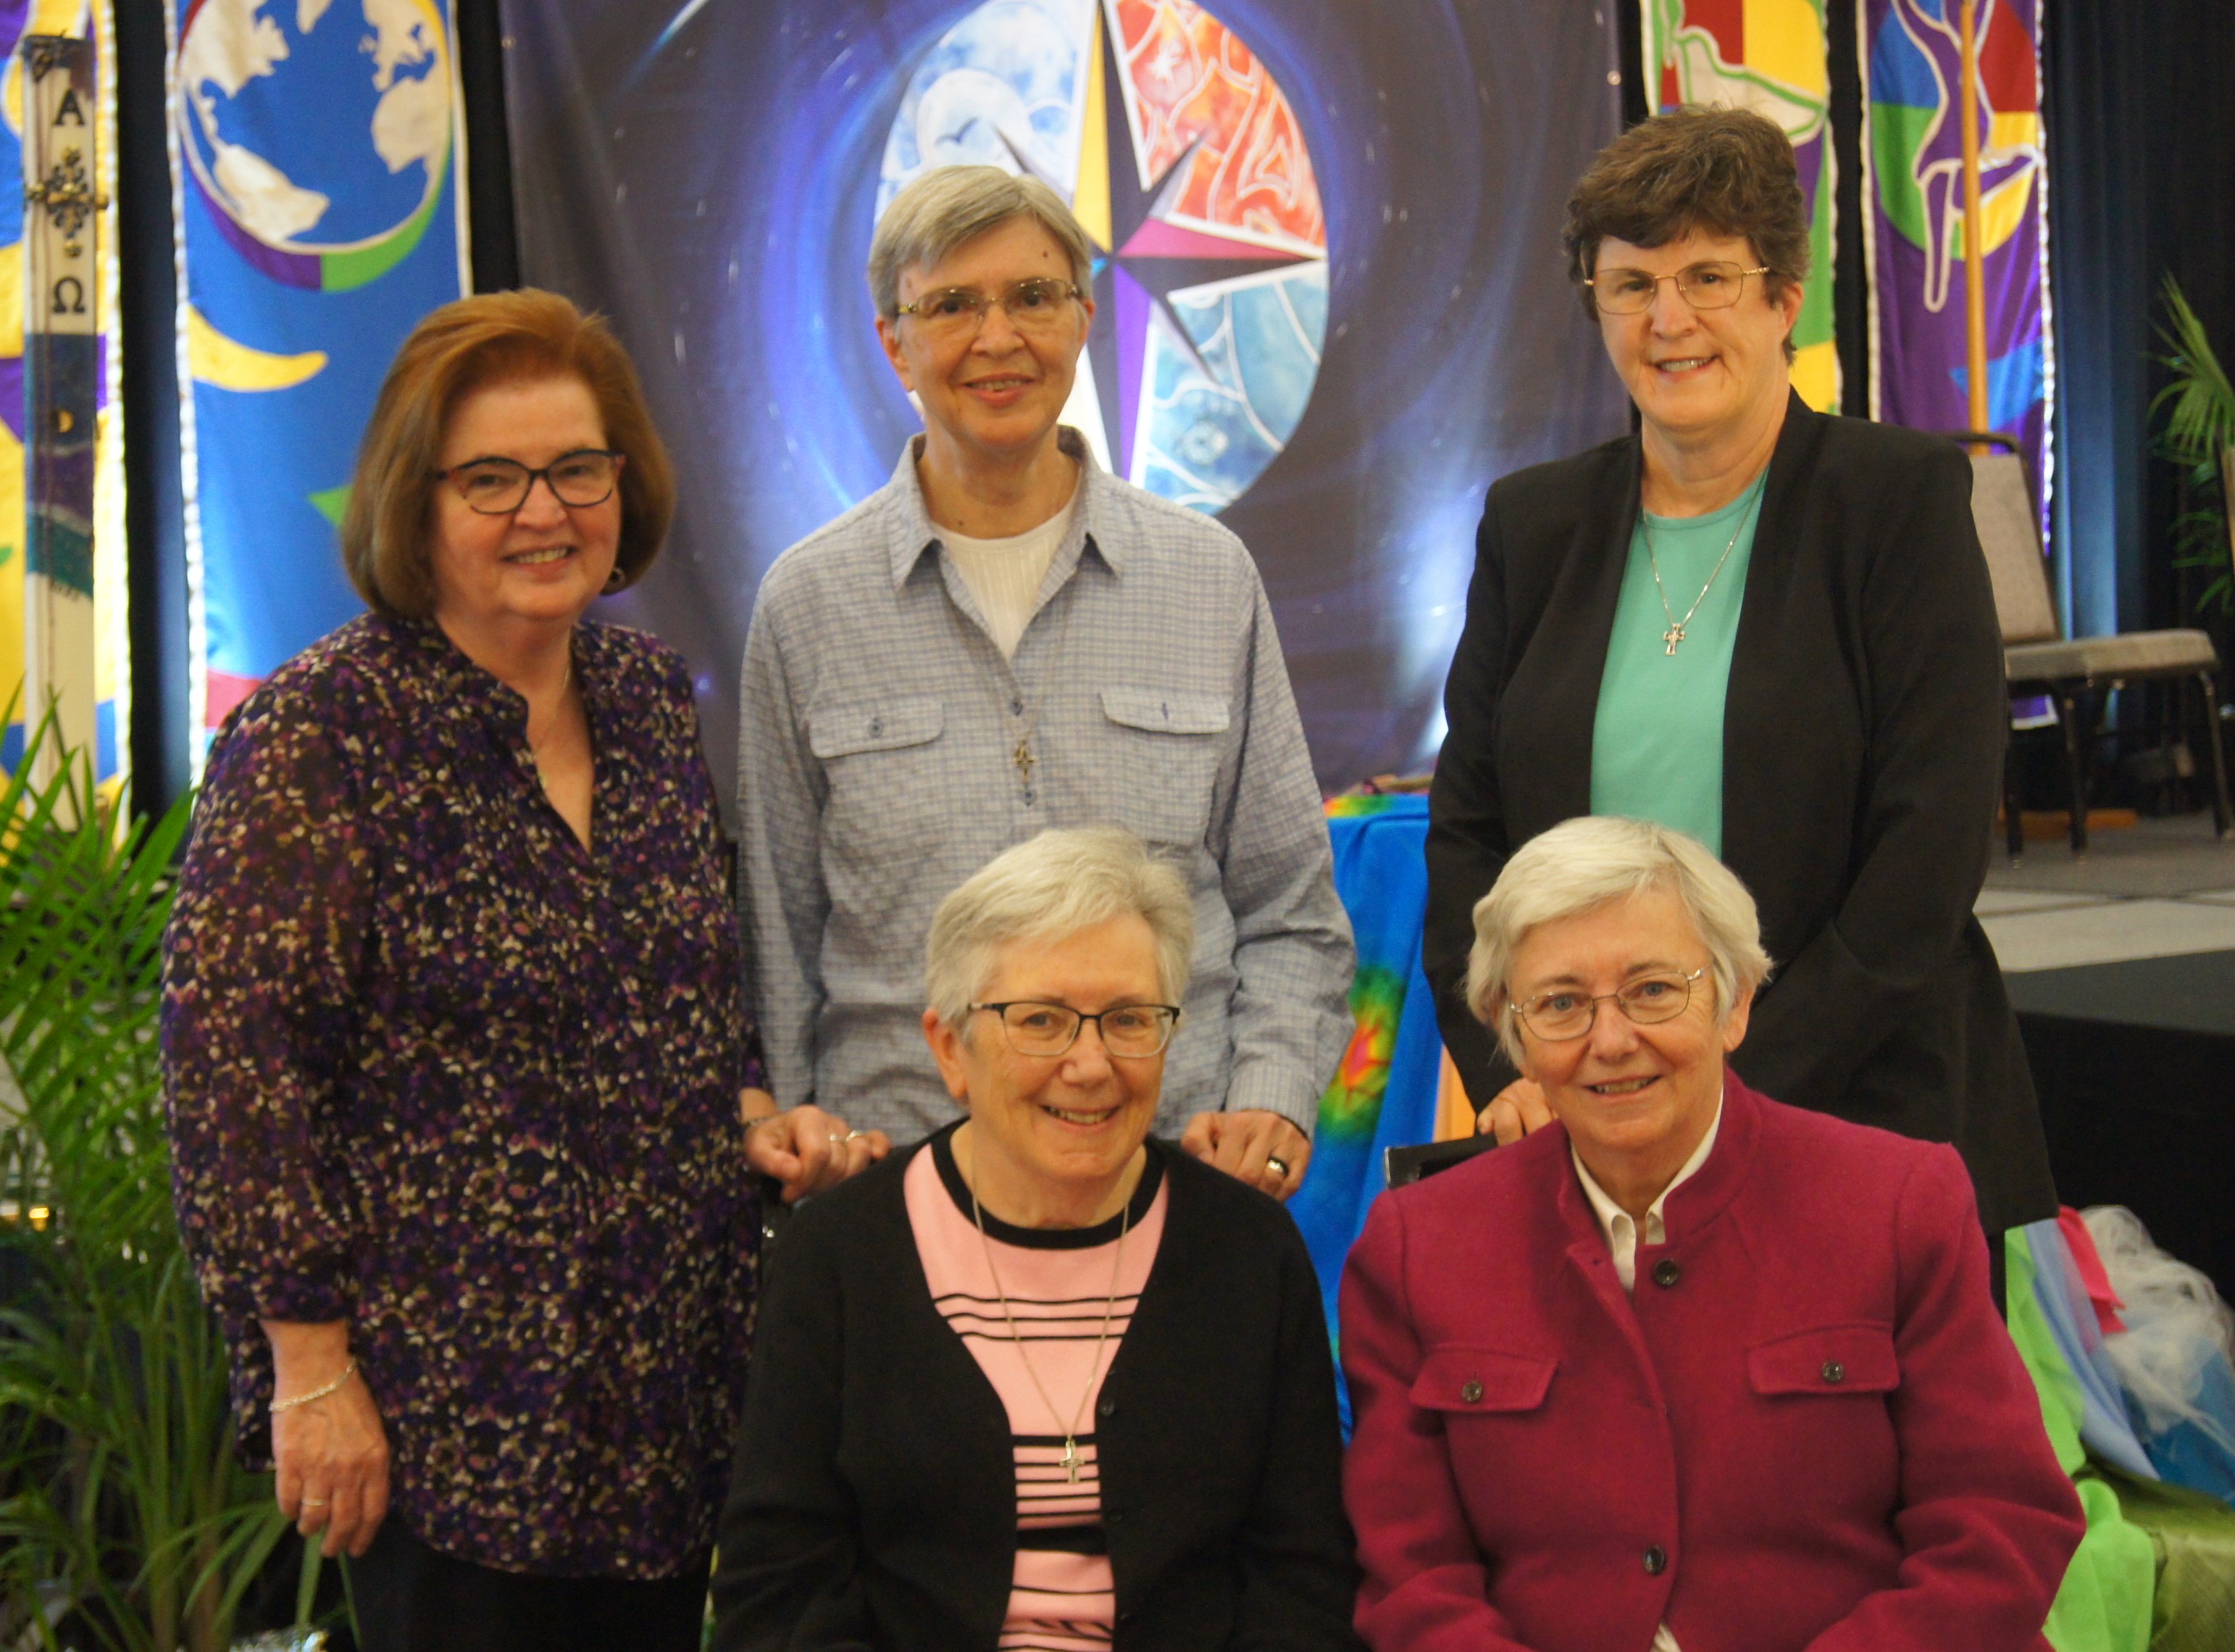 The Sisters of Mercy of the Americas' new leadership team, clockwise from left: Sr. Maureen King, Sr. Judith Frikker, Sr. Teresa Bednarz, Sr. Susan Sanders, Sr. Patricia Flynn (Courtesy of the Sisters of Mercy of the Americas)